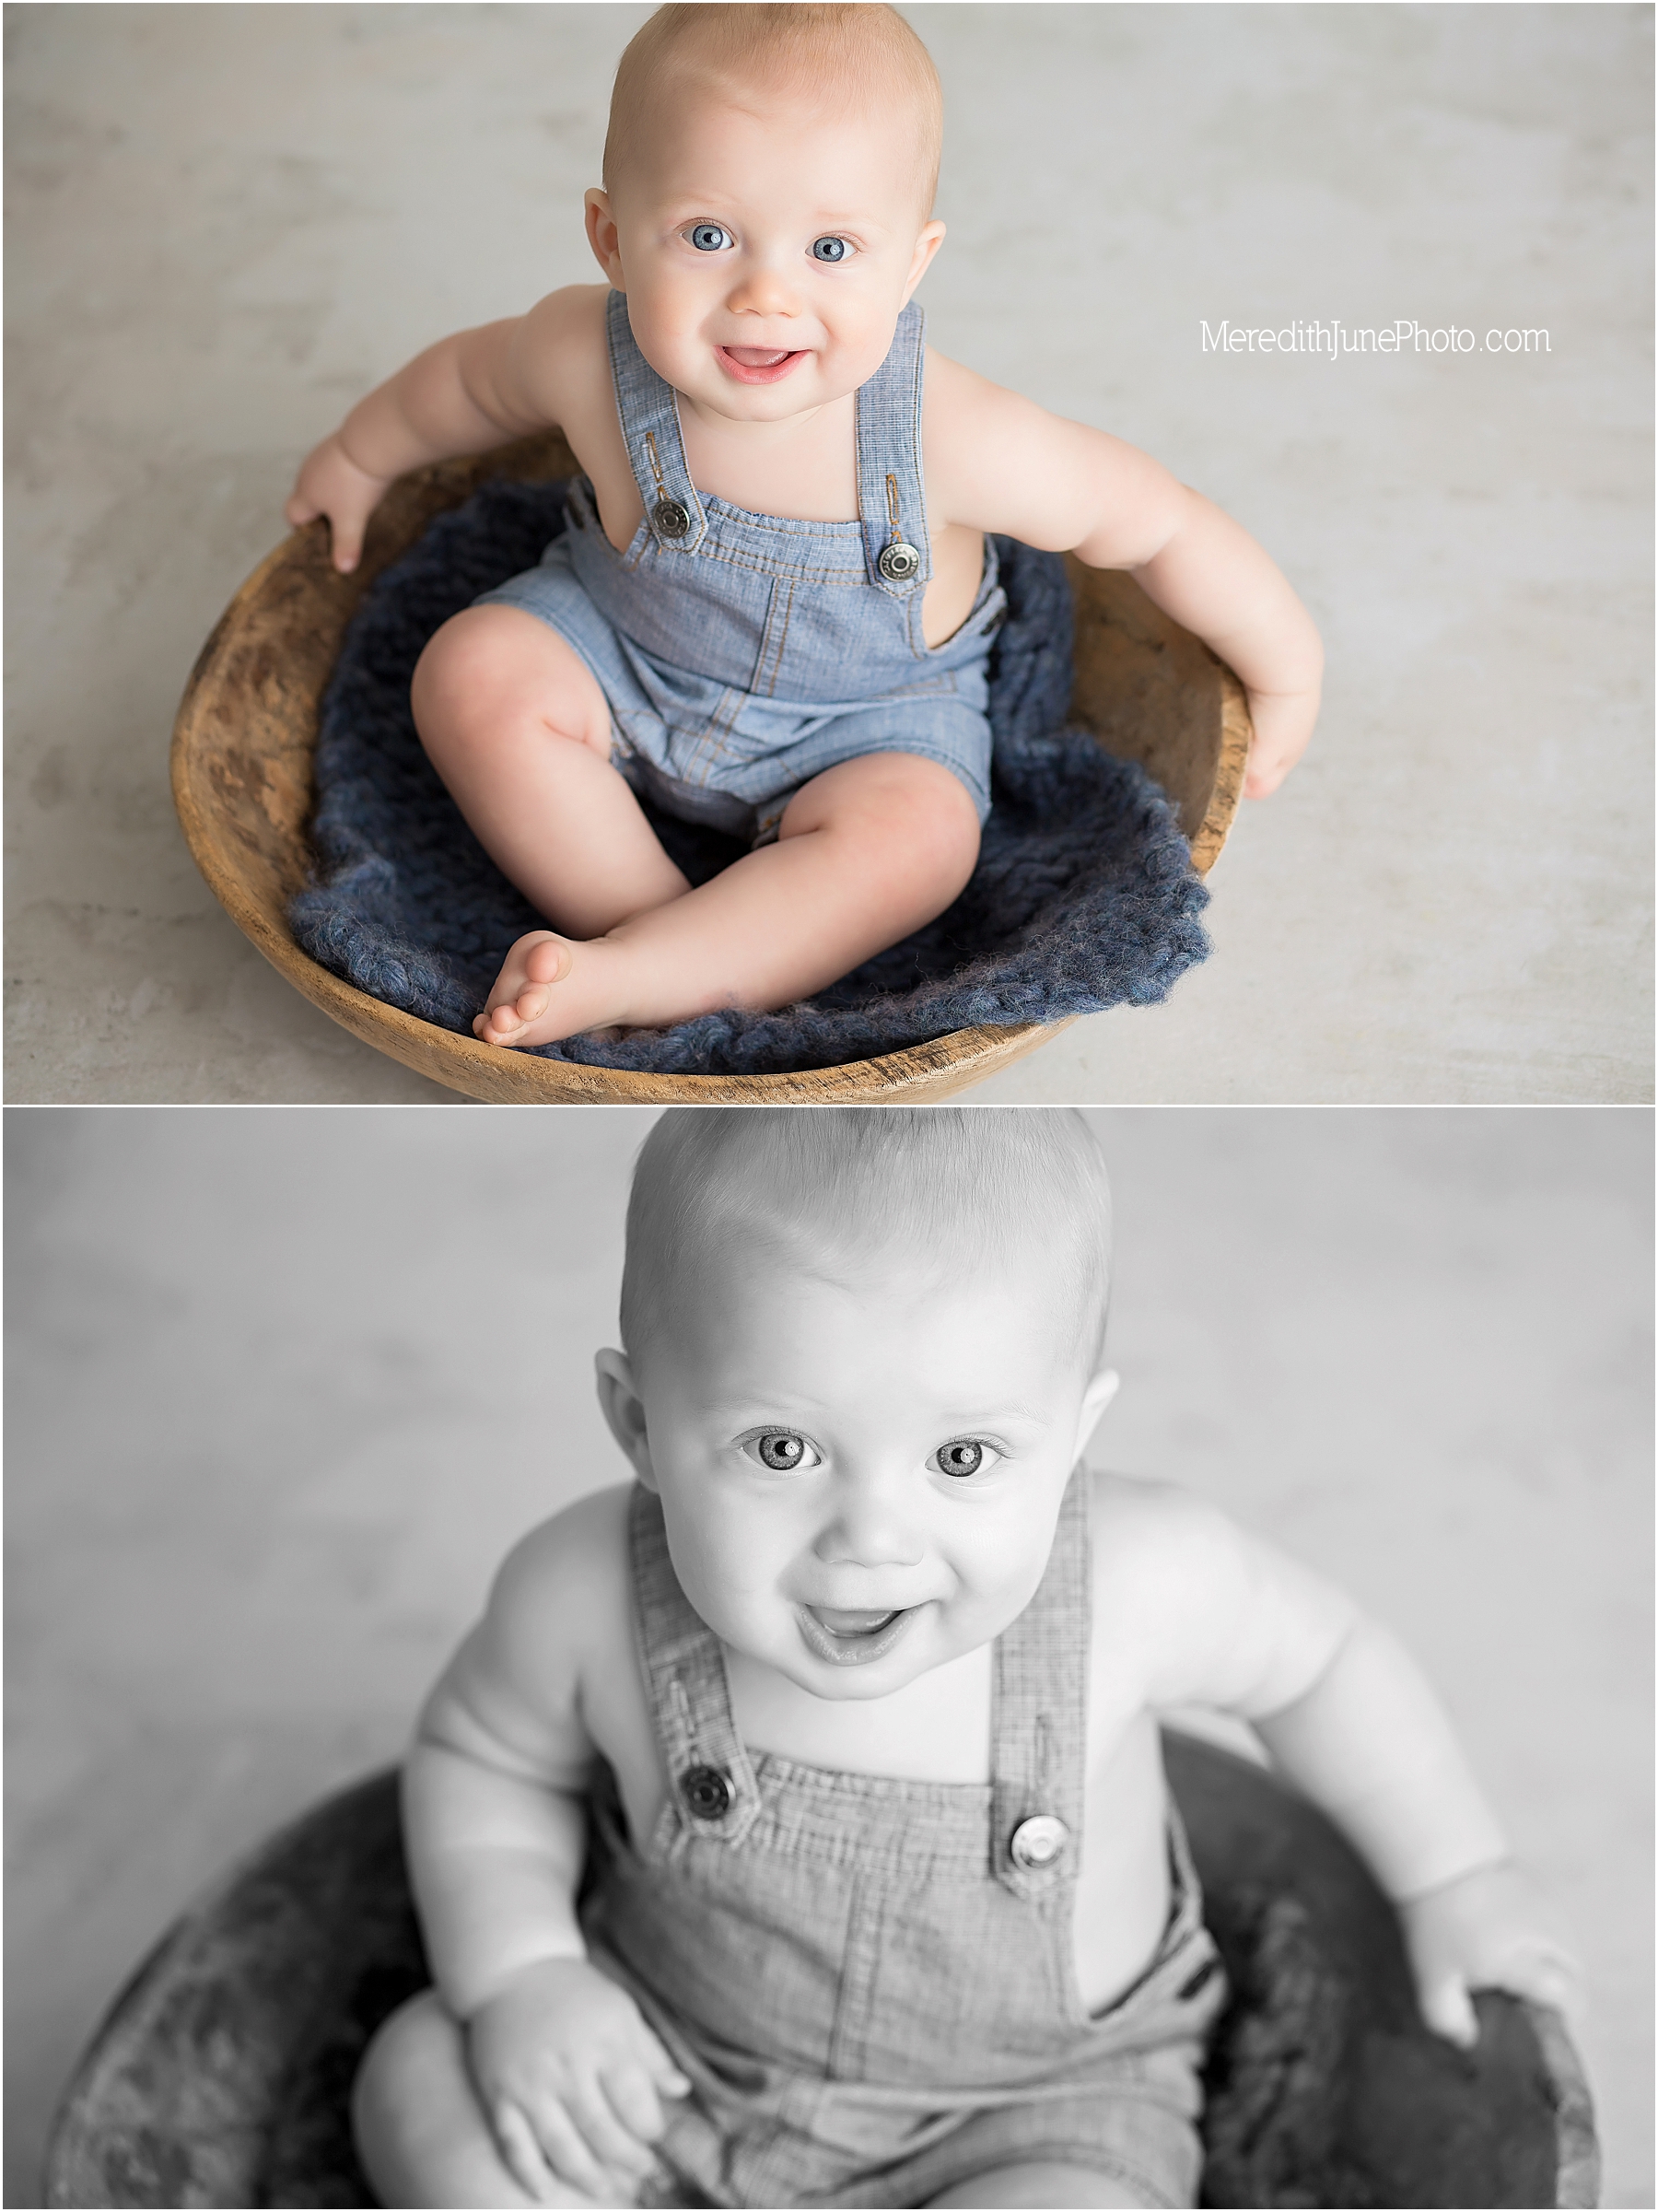 Baby Elijah's milestone photo session